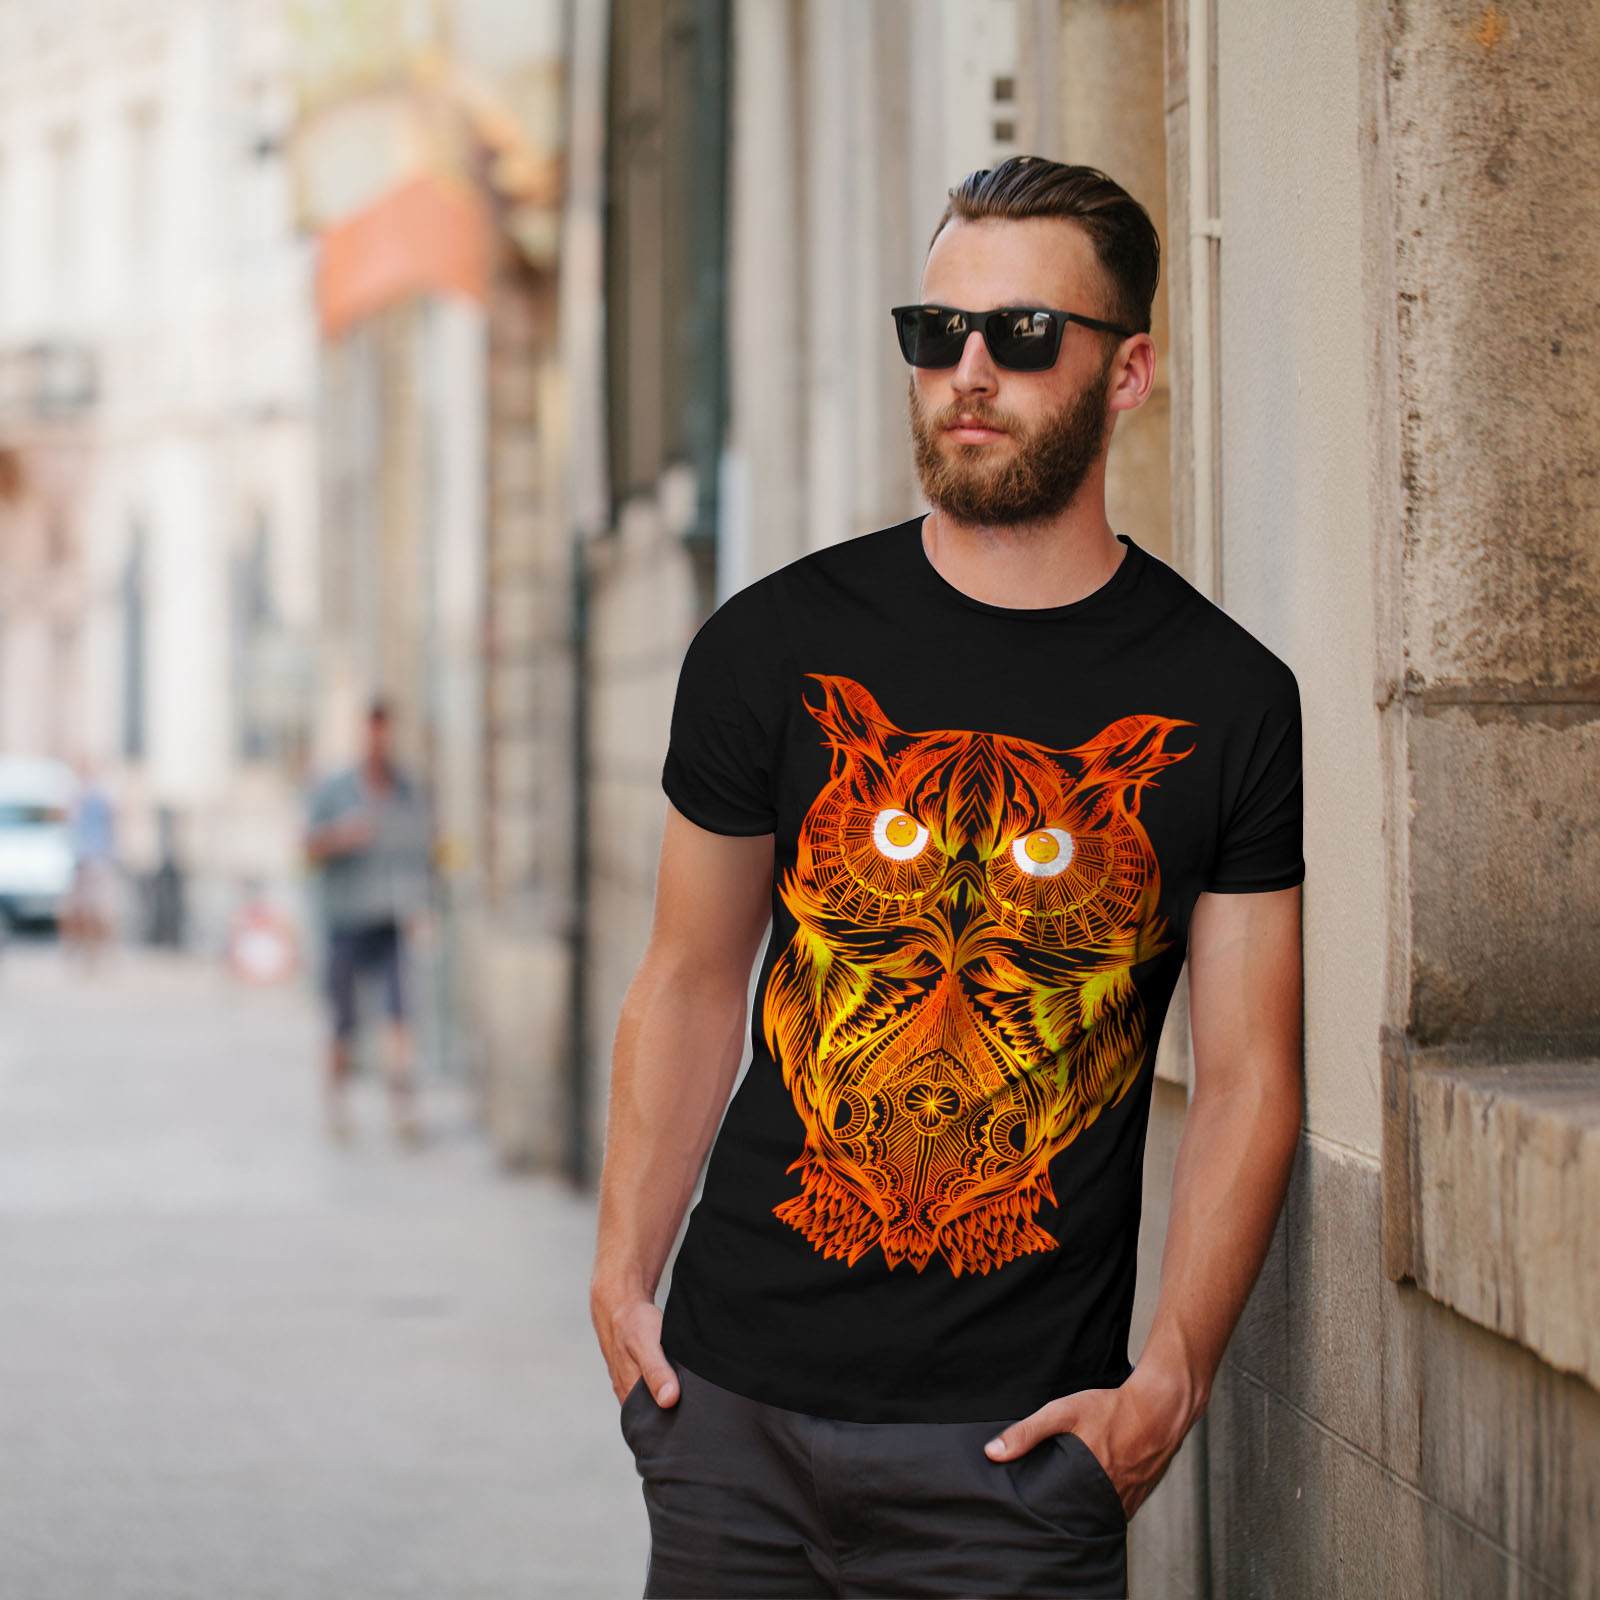 thumbnail 5  - Wellcoda Night Owl On Fire Mens T-shirt, Burning Graphic Design Printed Tee